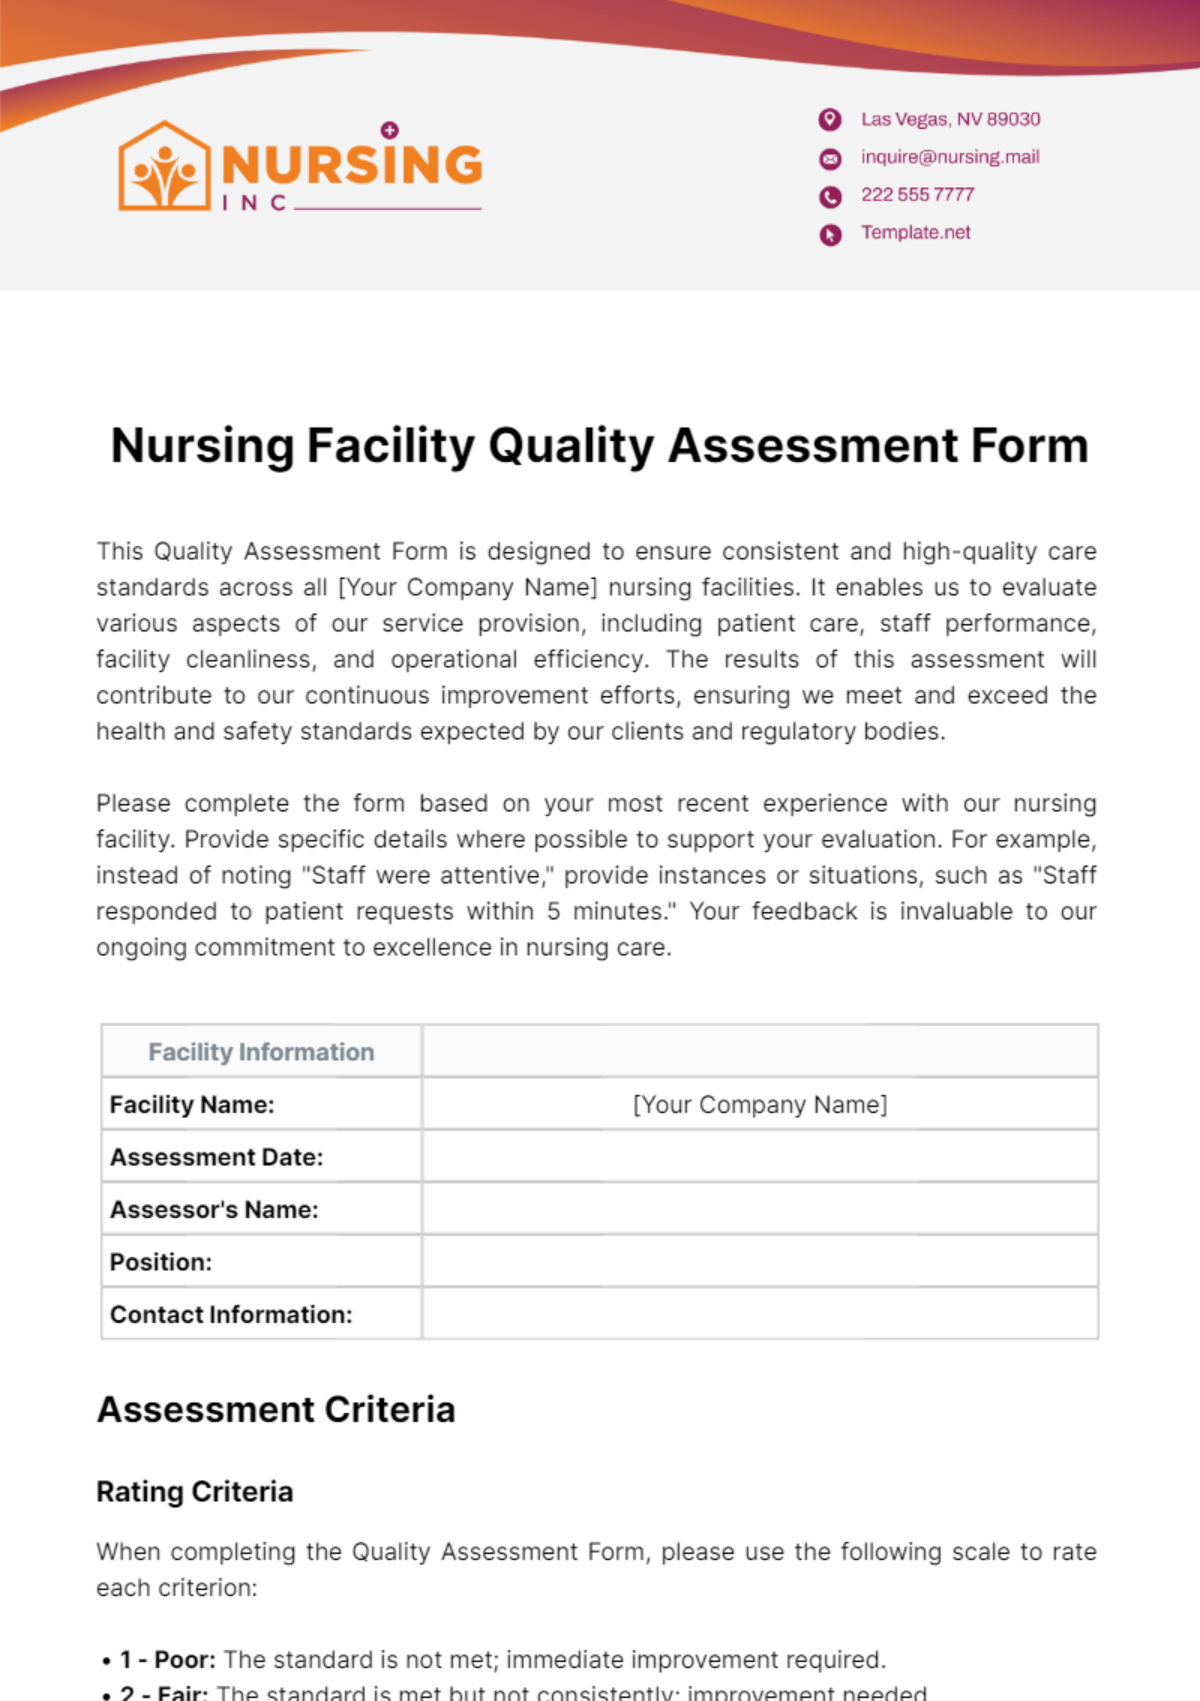 Free Nursing Facility Quality Assessment Form Template